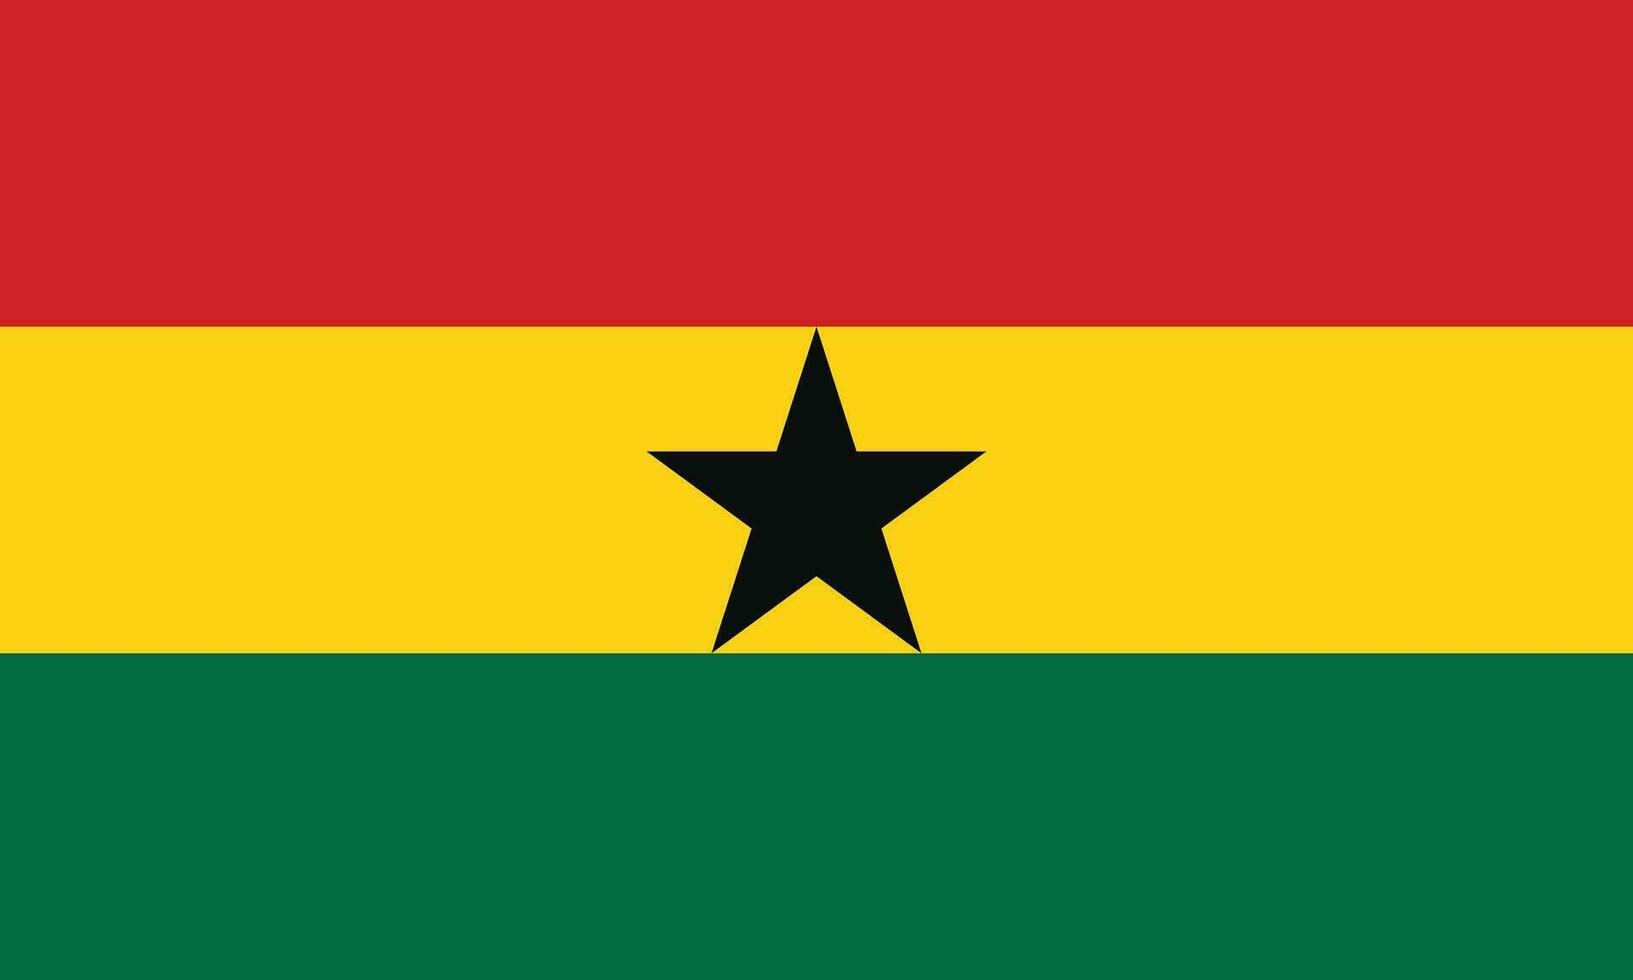 vlak illustratie van Ghana vlag. Ghana vlag ontwerp. vector